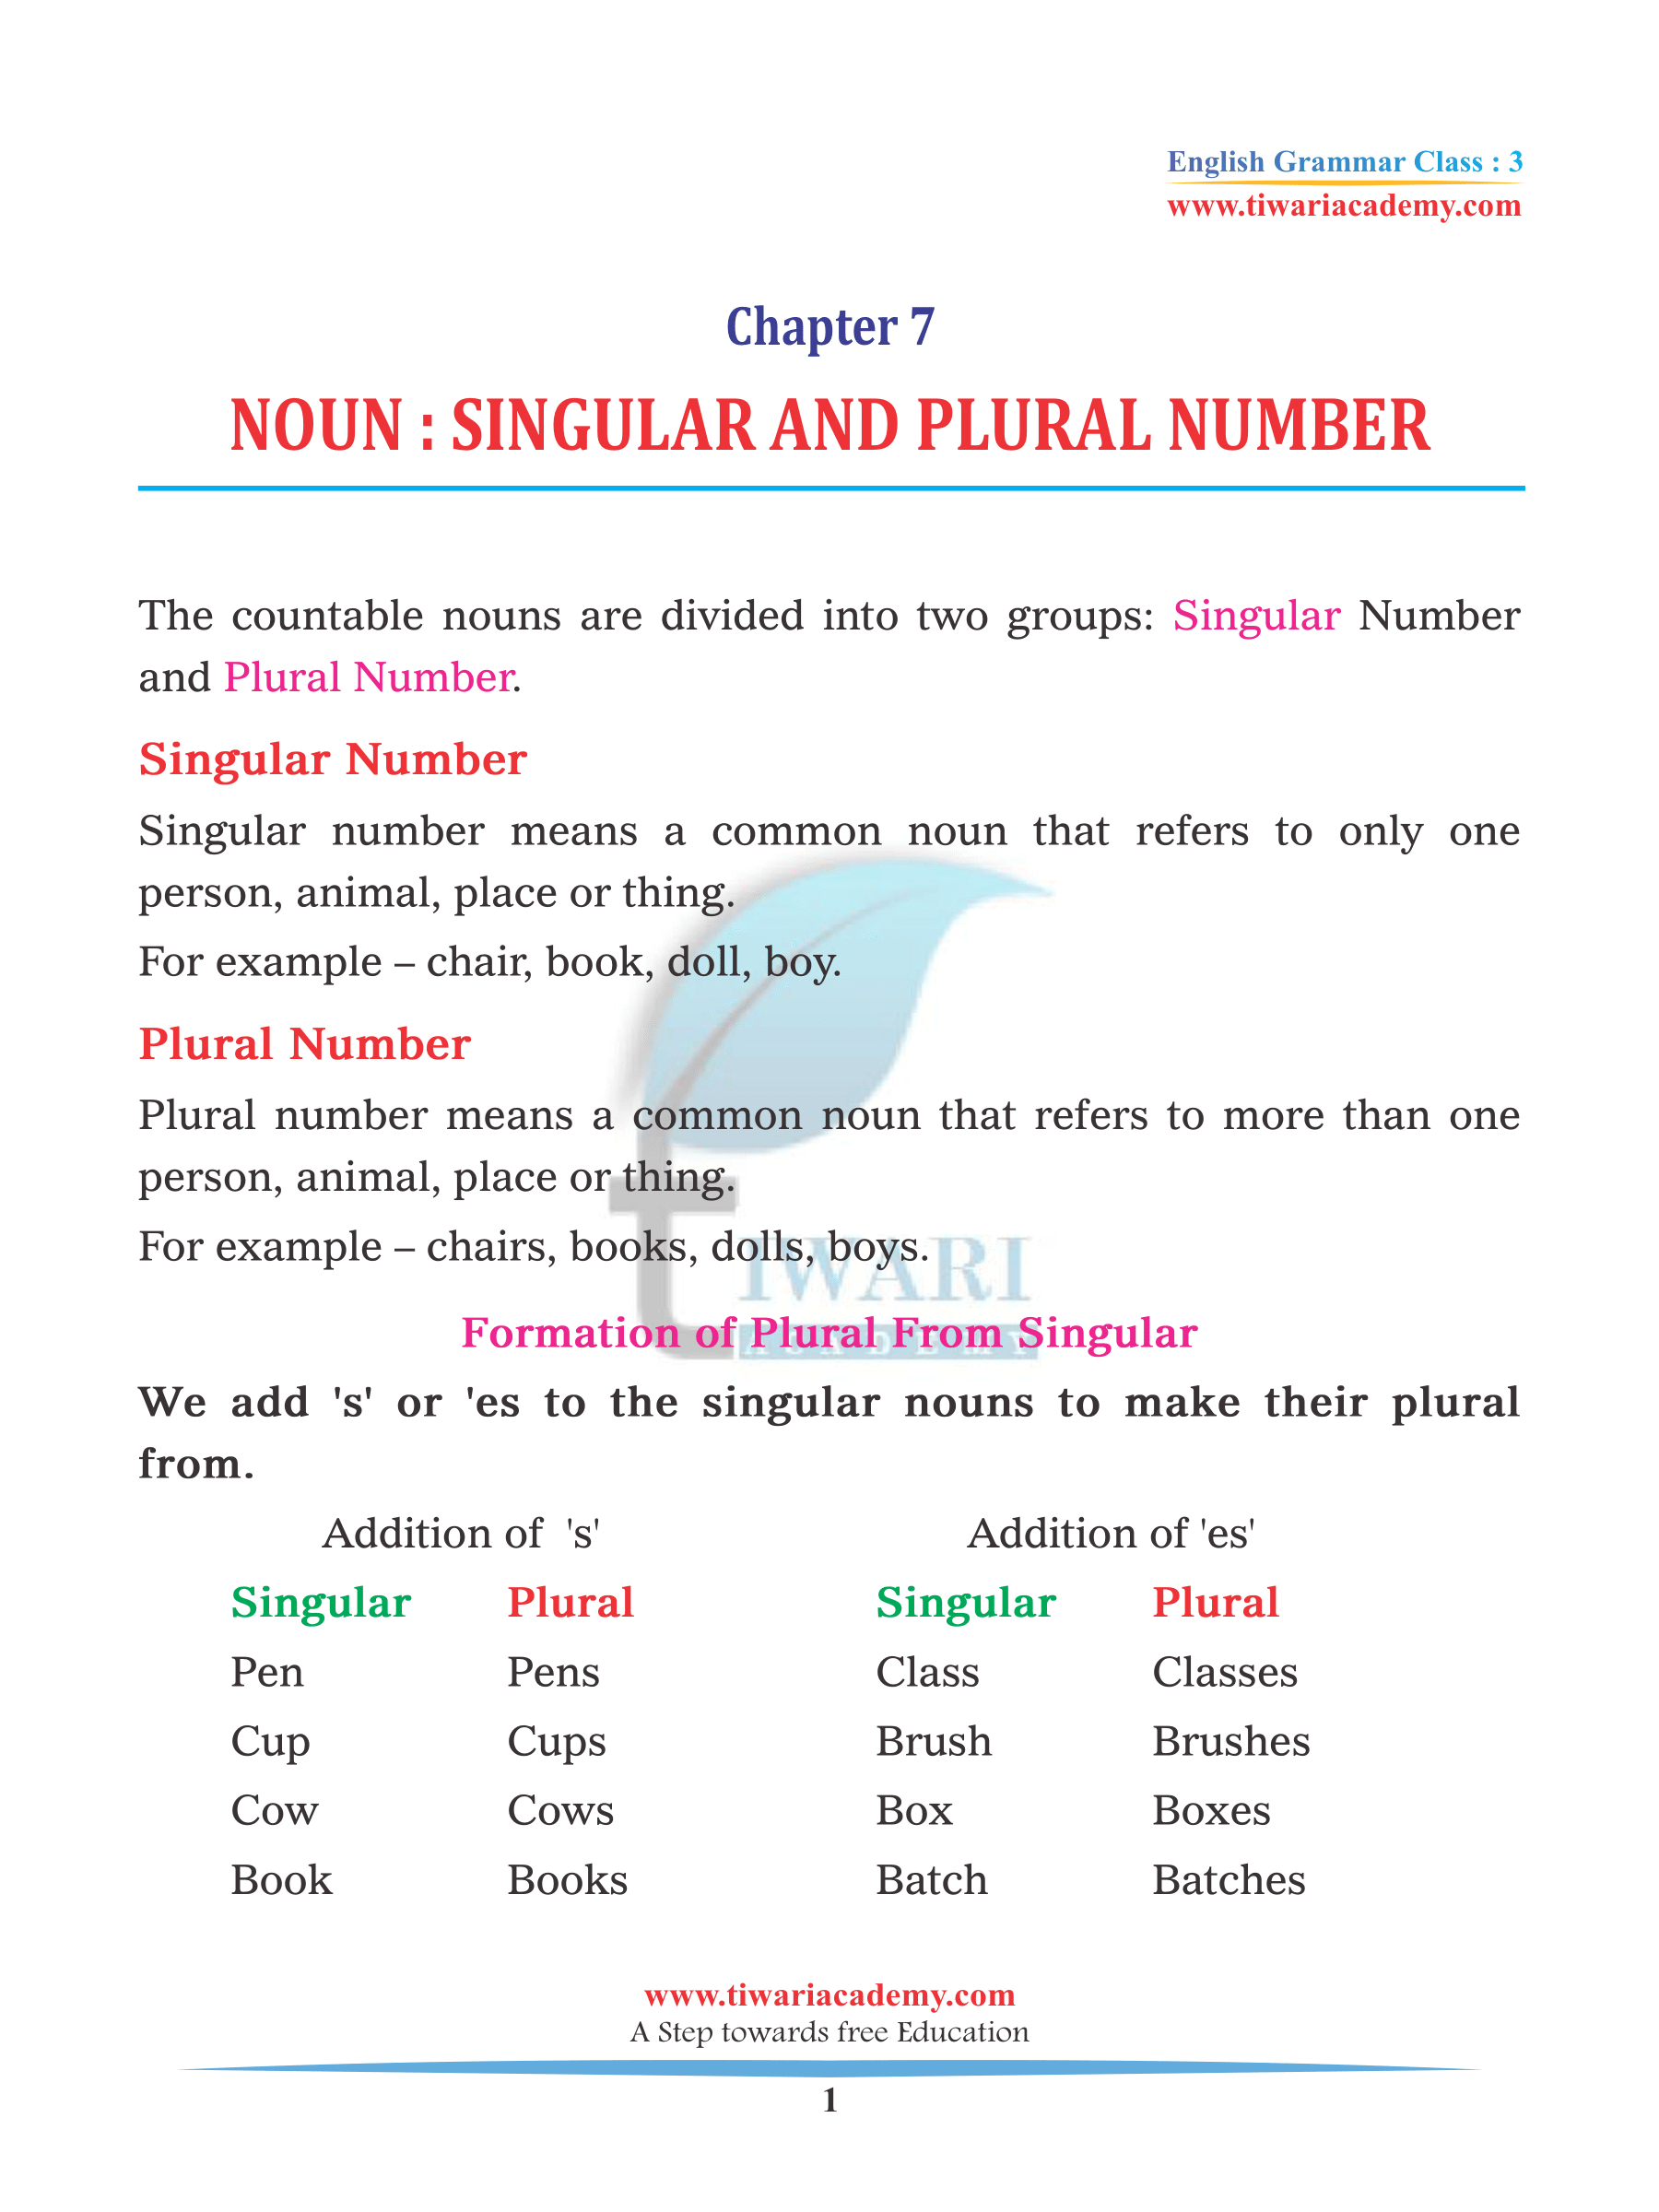 Class 3 English Grammar Chapter 7 Noun - Singular and Plural Number.